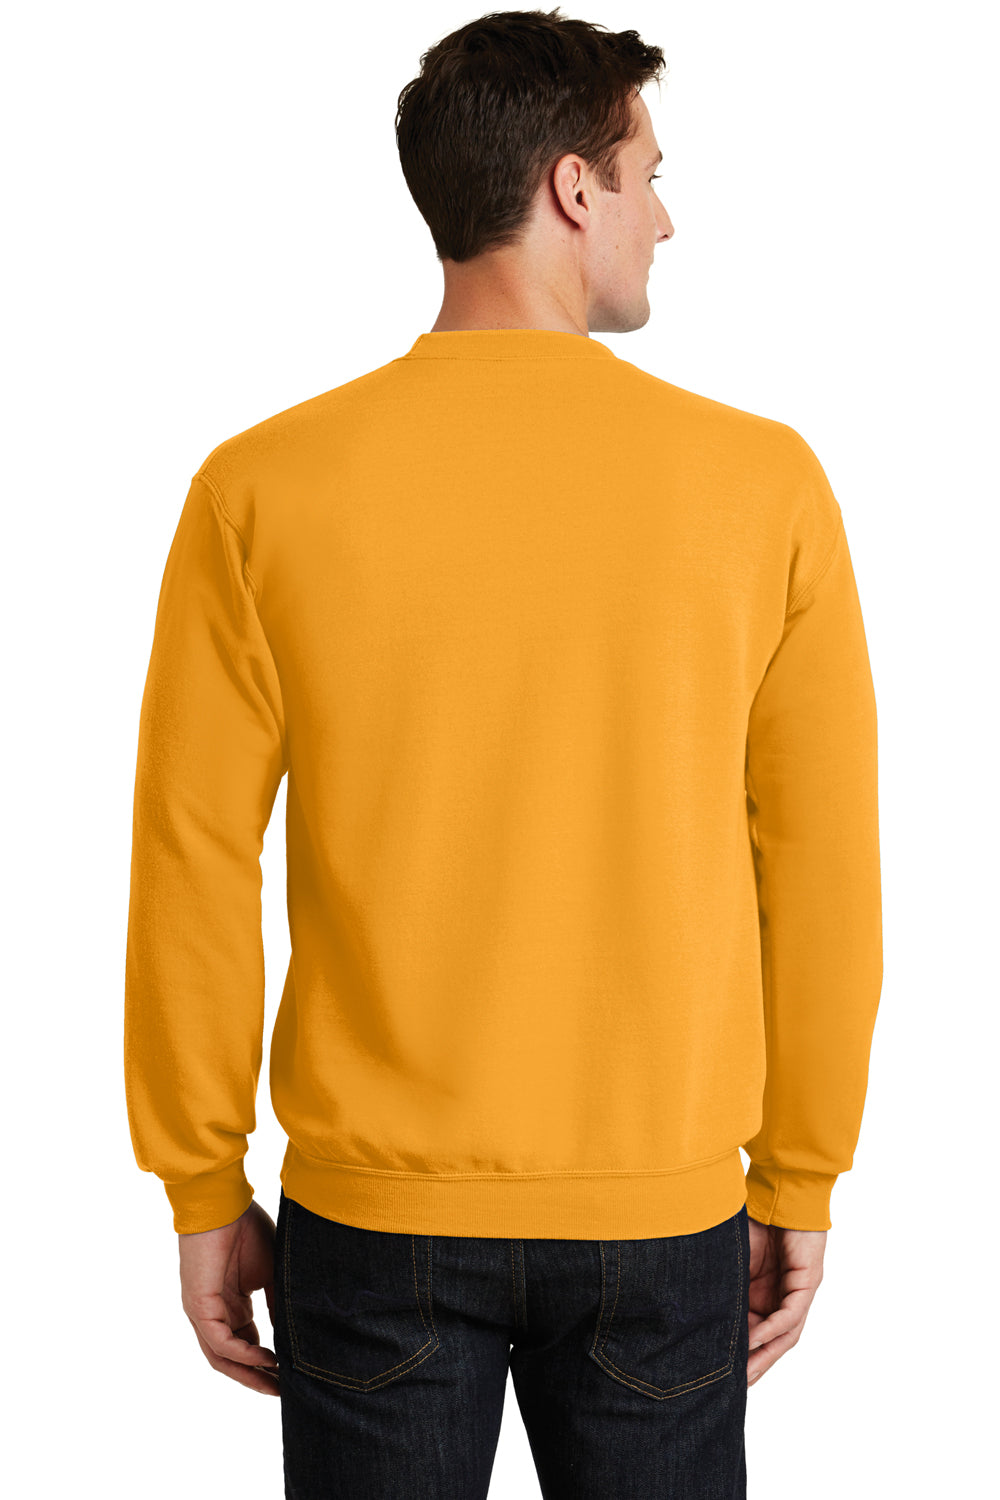 Port & Company PC78 Mens Core Fleece Crewneck Sweatshirt Gold Back